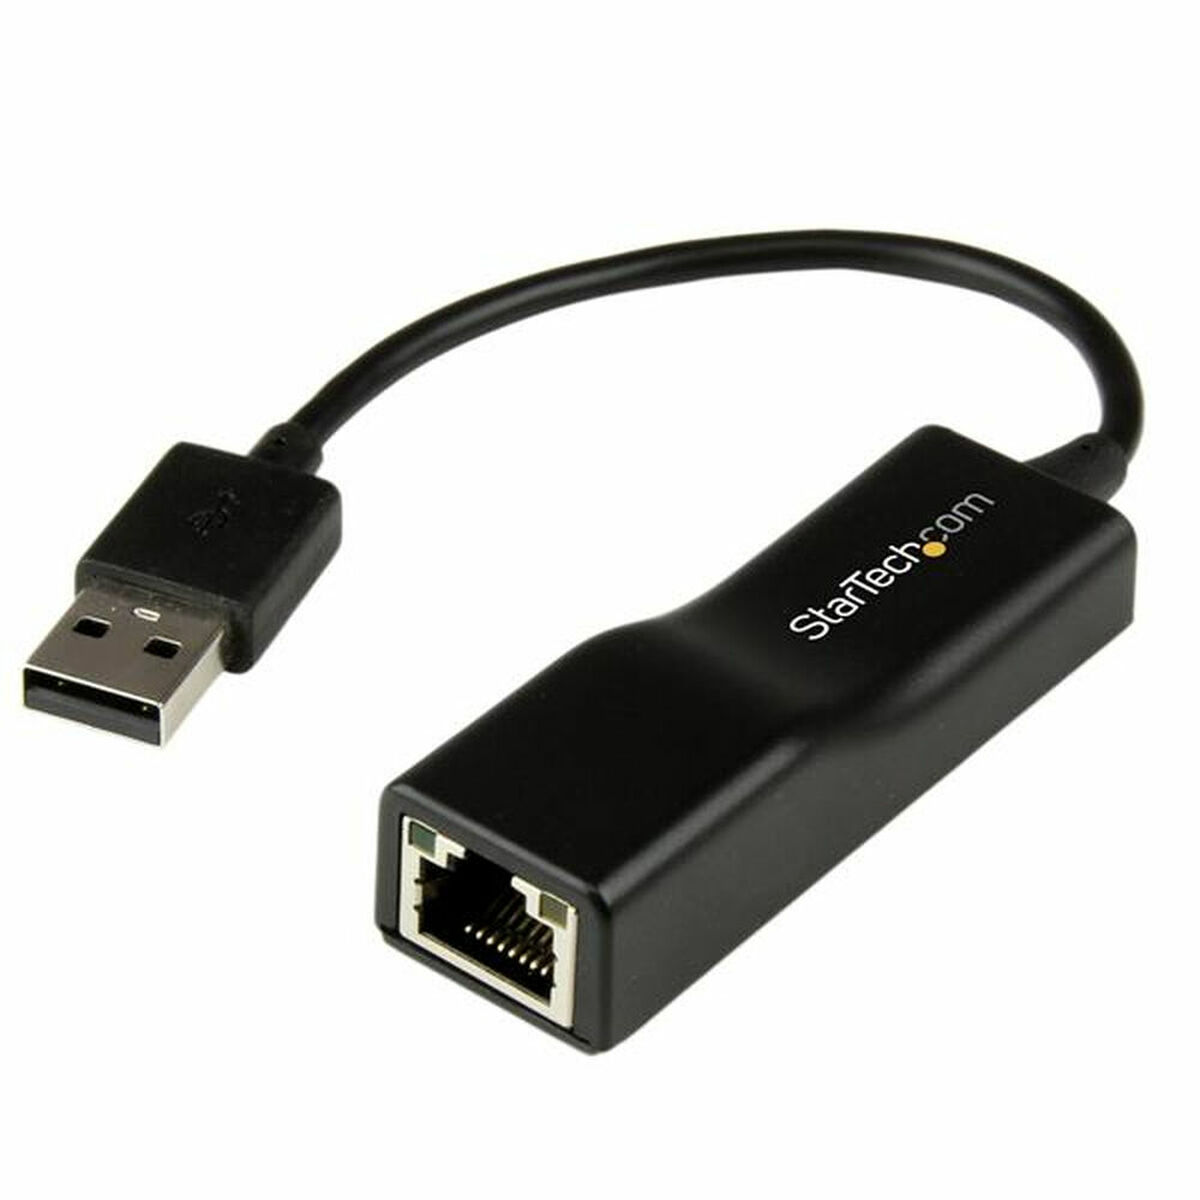 Adapteur réseau Startech USB2100             